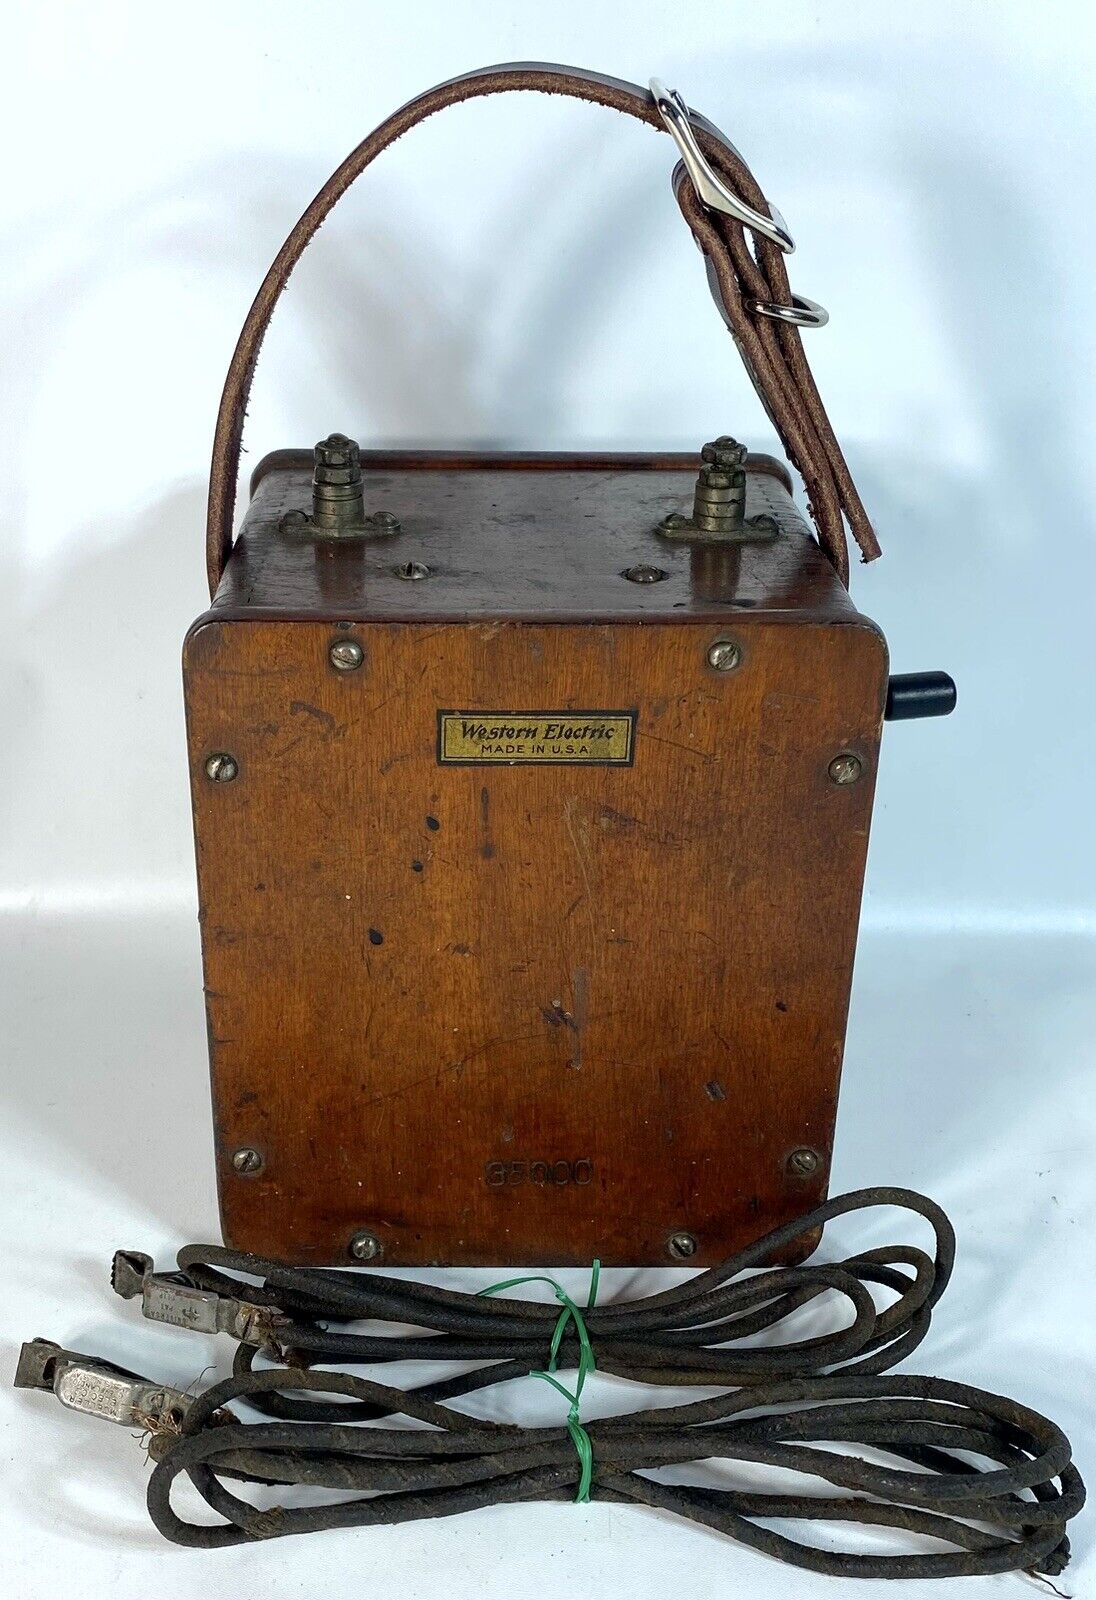 Refurbished Antique Western Electric Hand Crank Telegraph Magneto Generator NICE